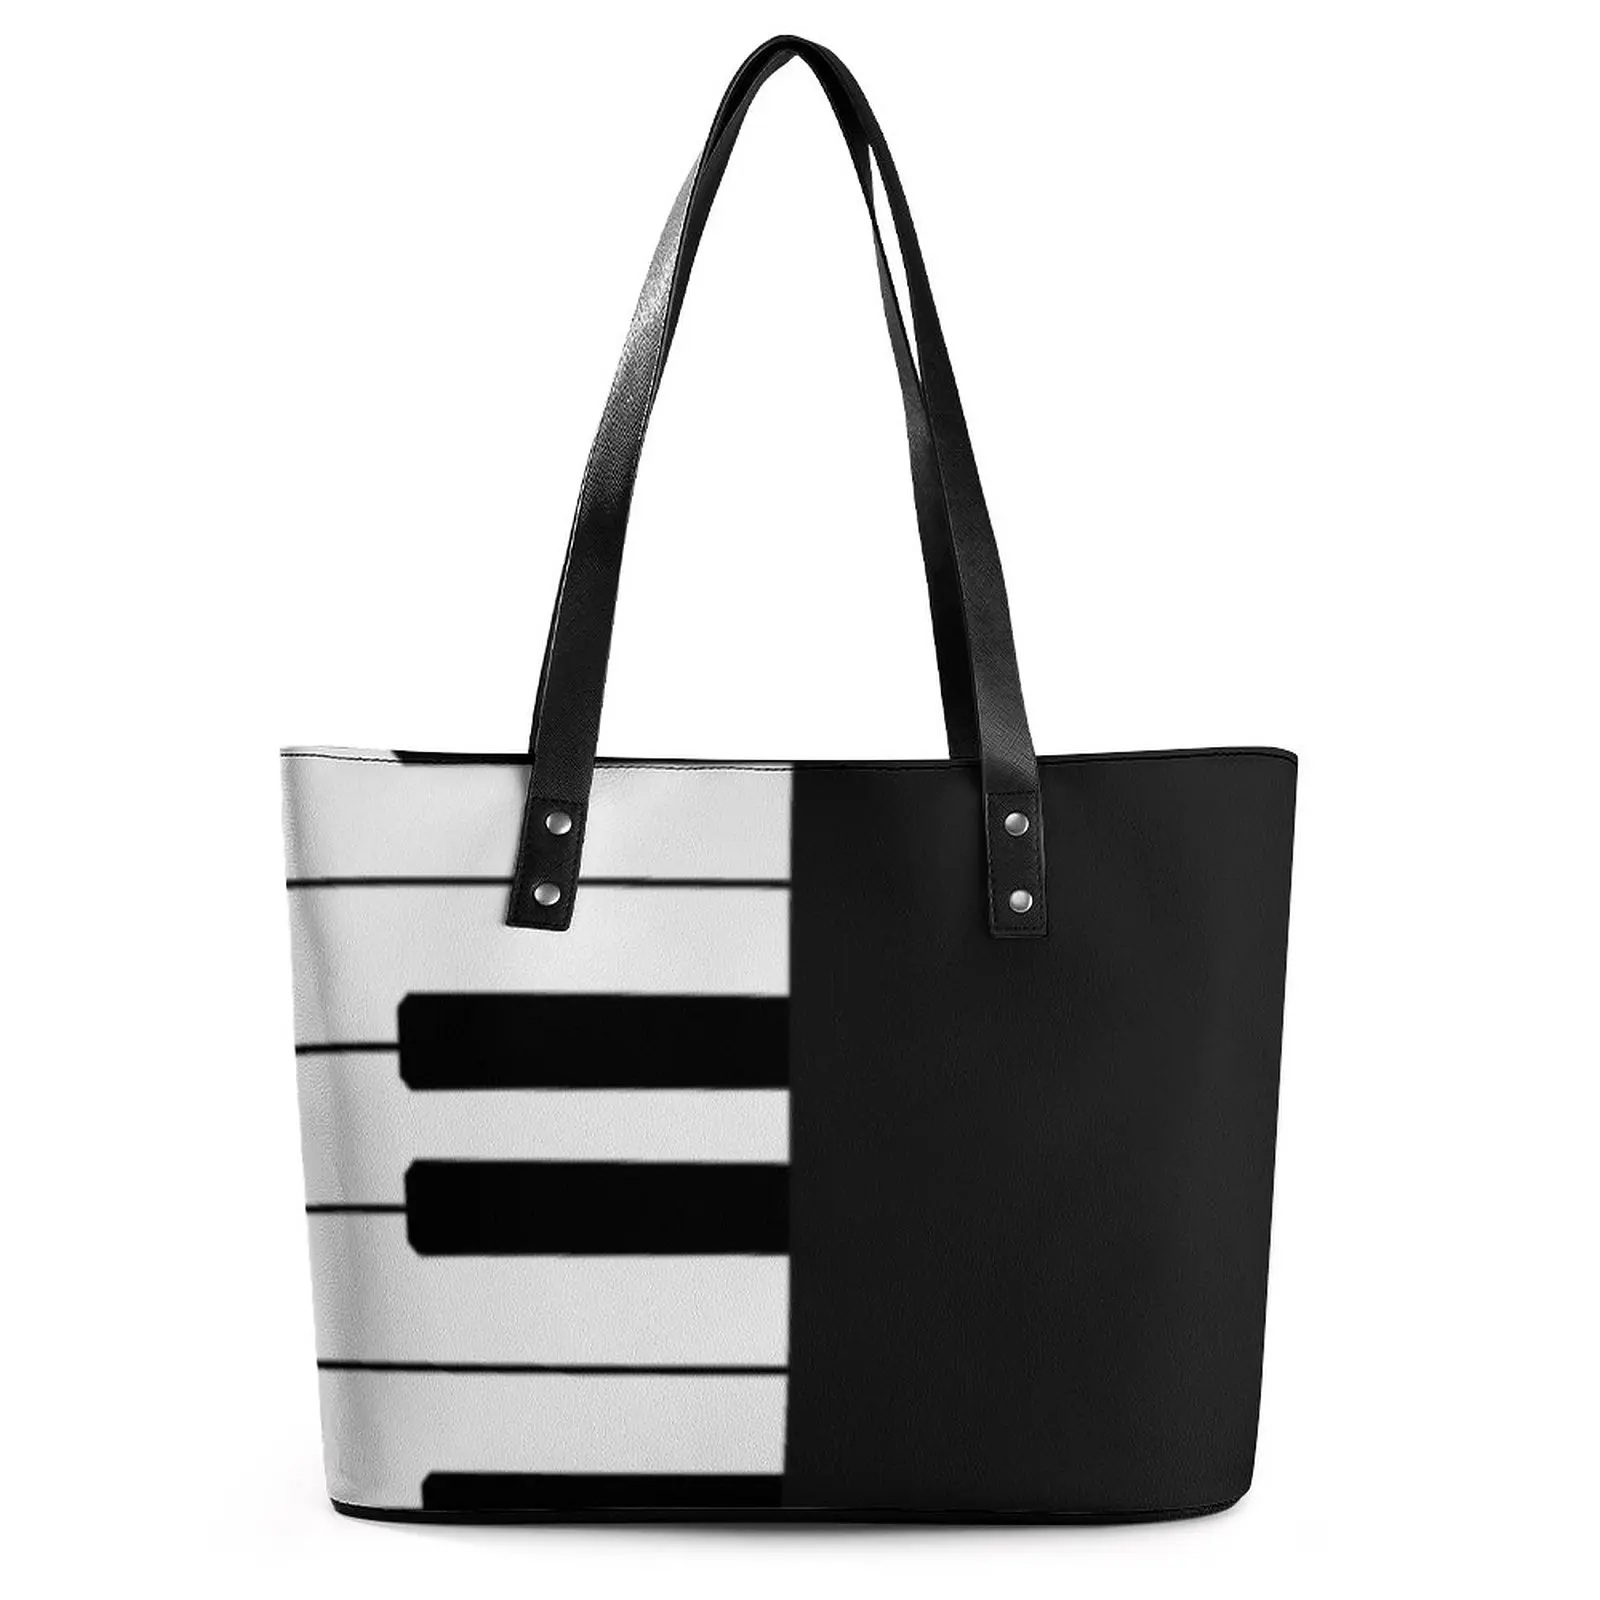 

Piano Keys Handbags Black and White Beach Tote Bag Student Fun Shoulder Bag Graphic Handle PU Leather Shopper Bags